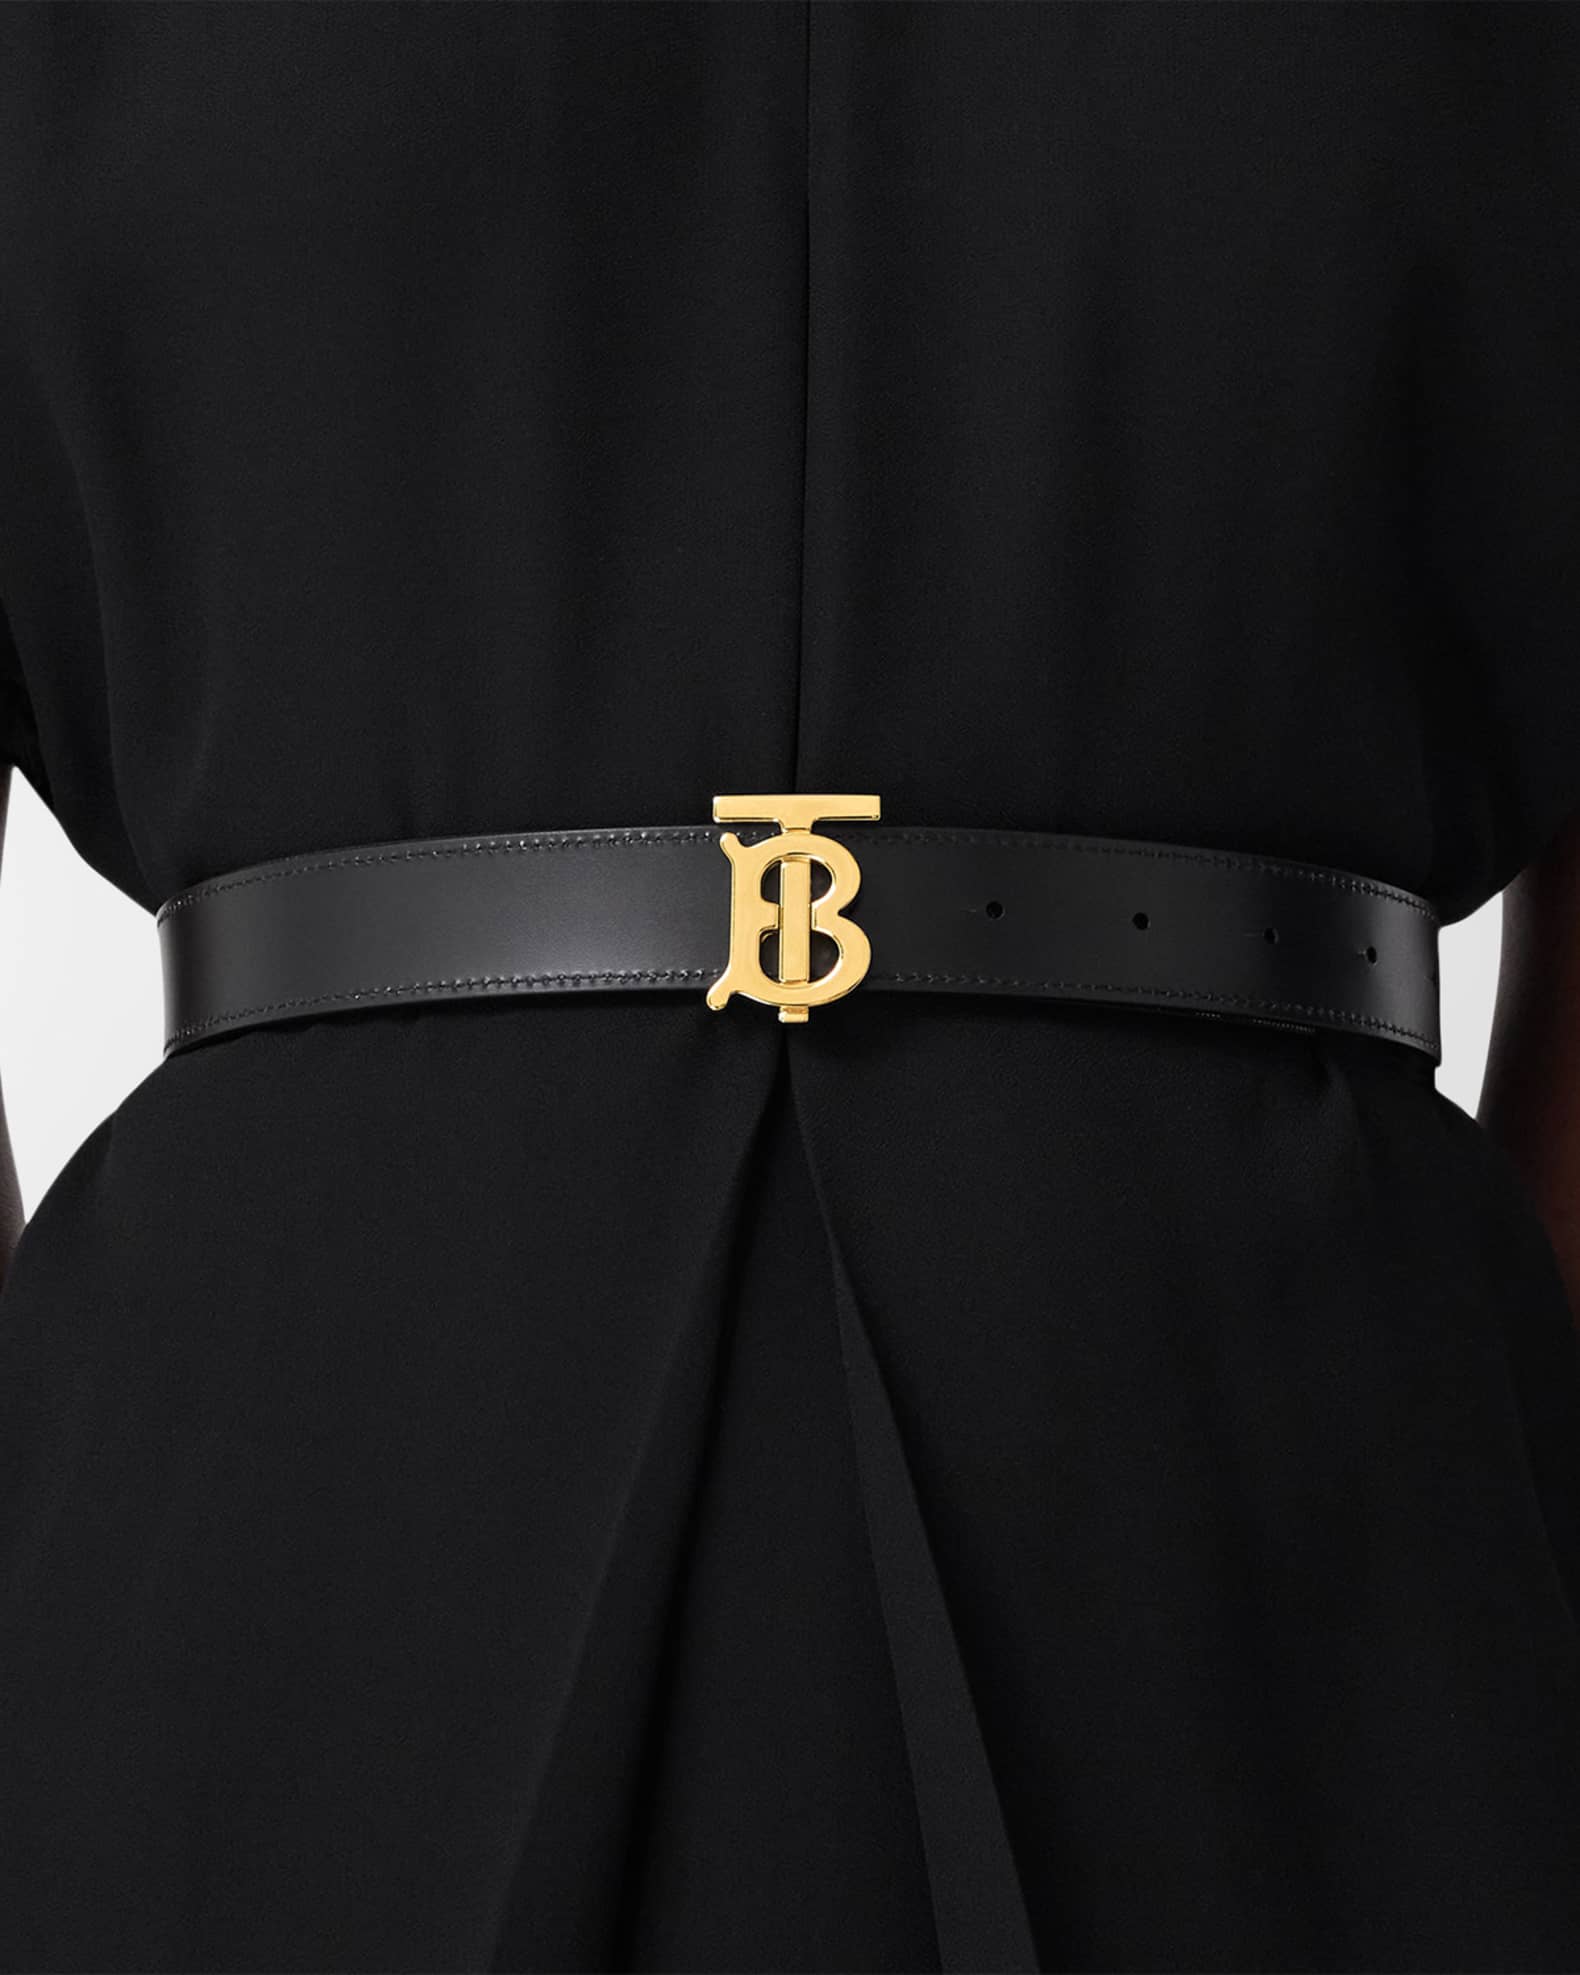 Burberry Black/Brown Leather Reversible Monogram Motif Buckle Belt M  Burberry